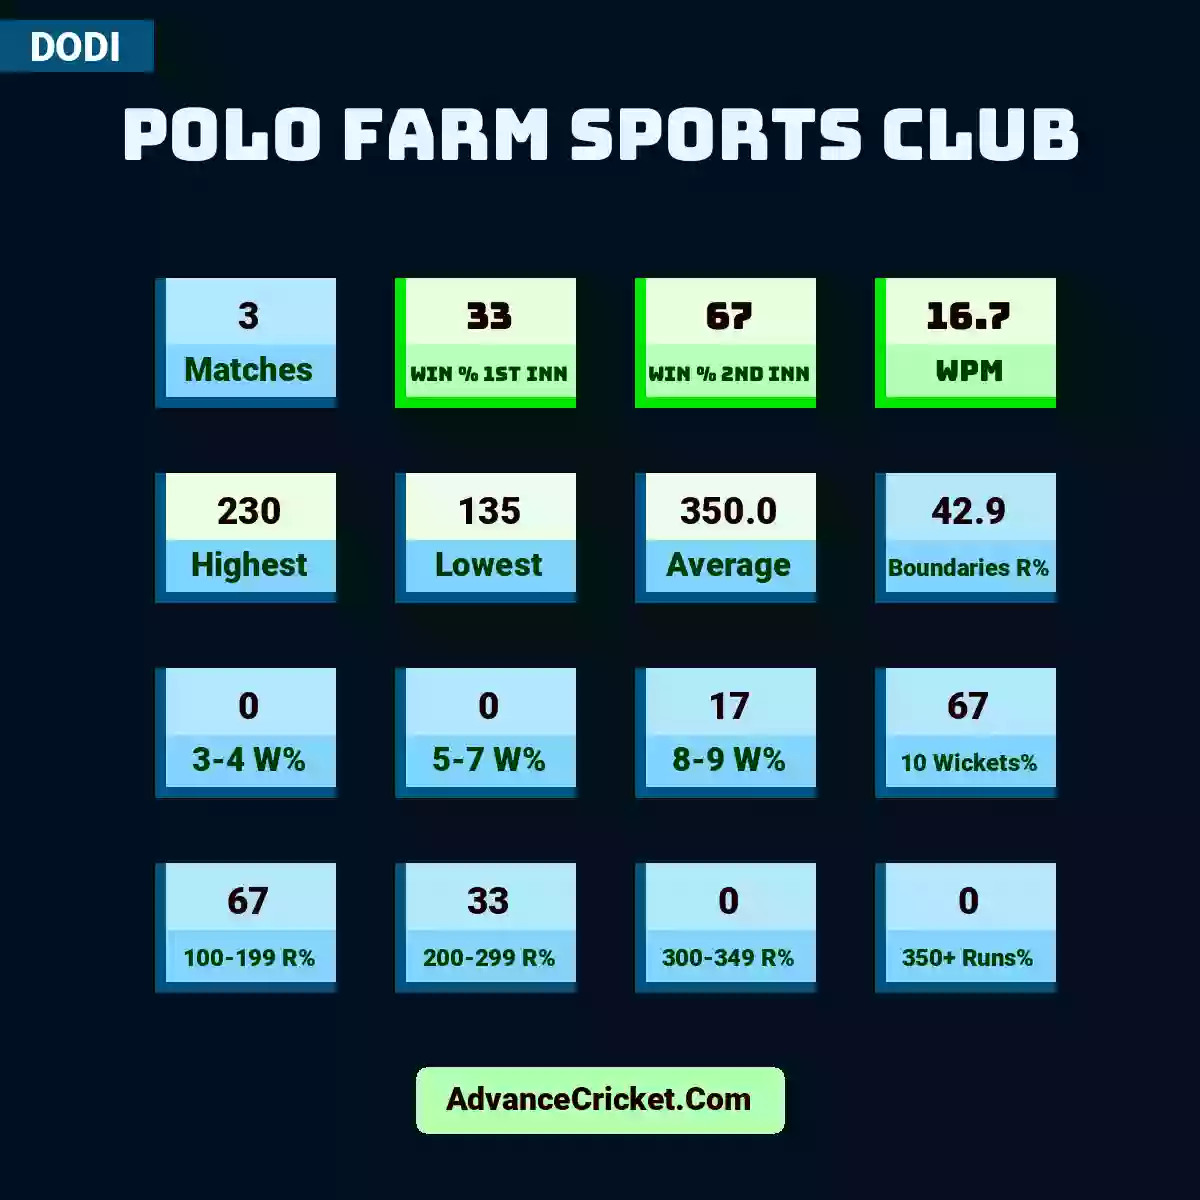 Image showing Polo Farm Sports Club with Matches: 3, Win % 1st Inn: 33, Win % 2nd Inn: 67, WPM: 16.7, Highest: 230, Lowest: 135, Average: 350.0, Boundaries R%: 42.9, 3-4 W%: 0, 5-7 W%: 0, 8-9 W%: 17, 10 Wickets%: 67, 100-199 R%: 67, 200-299 R%: 33, 300-349 R%: 0, 350+ Runs%: 0.